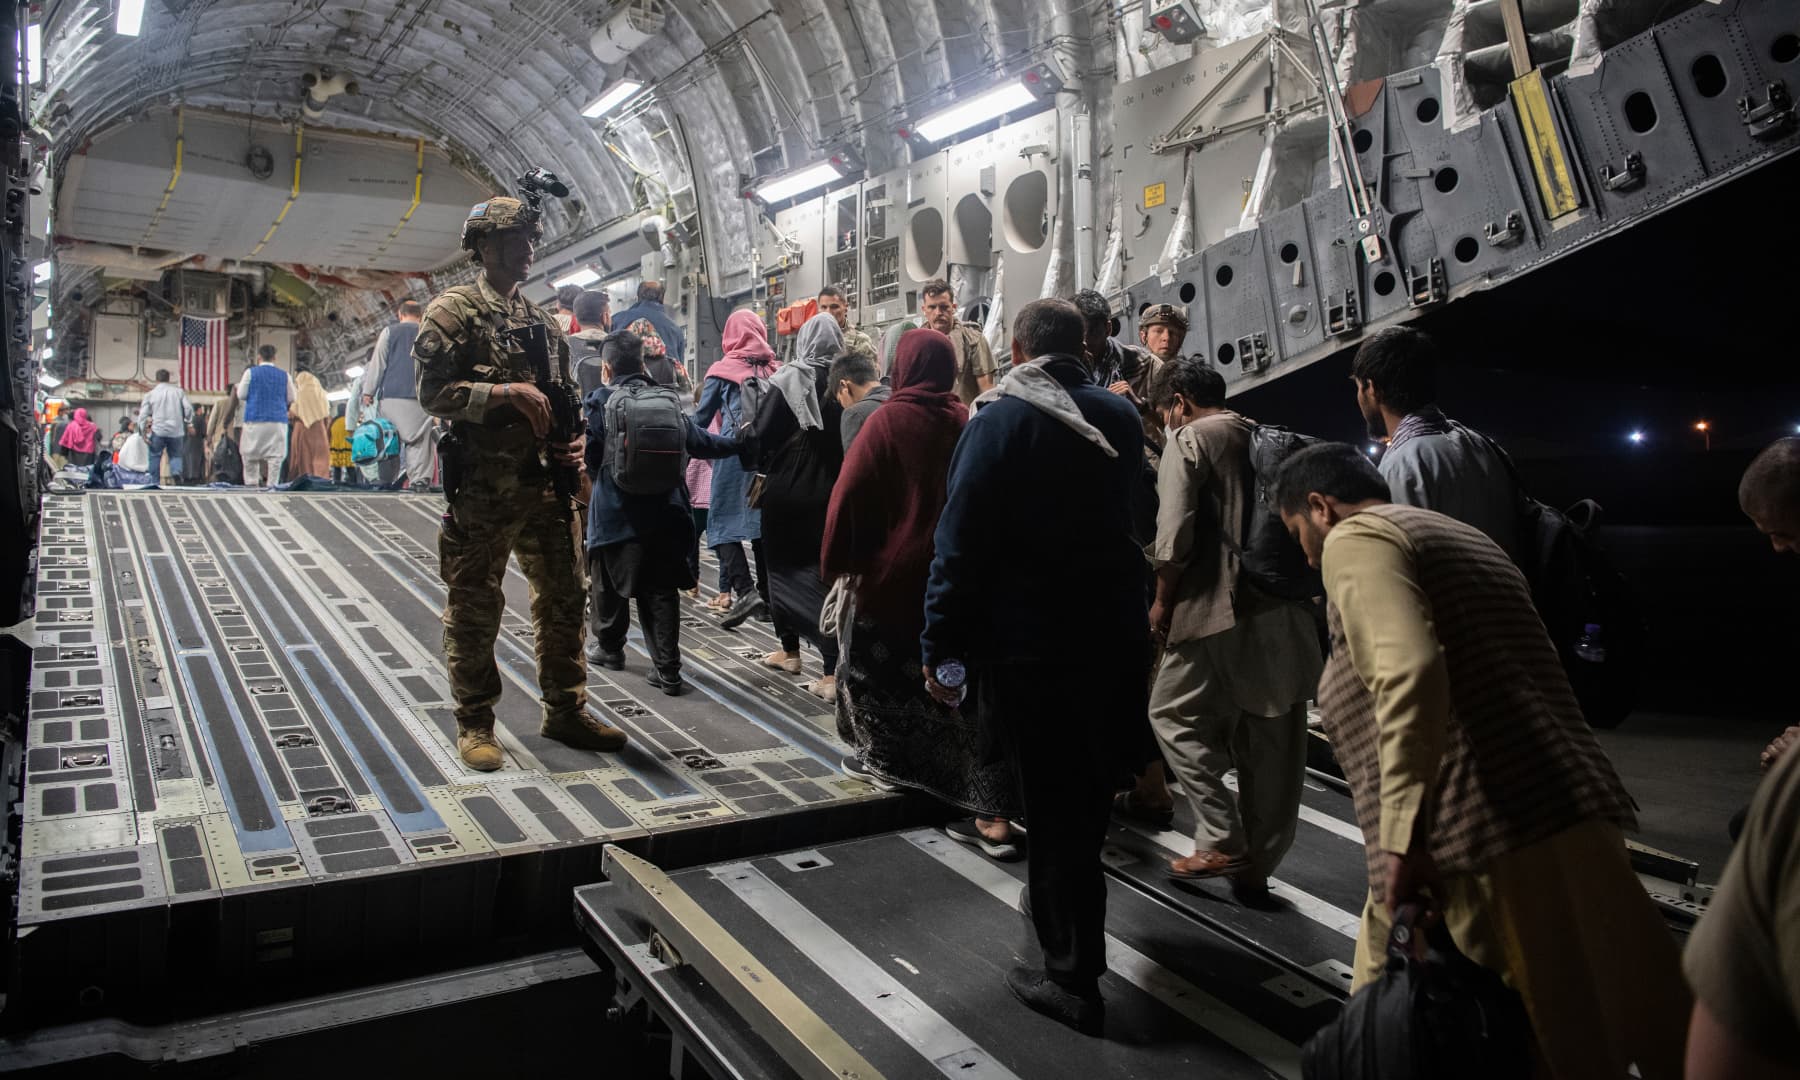 Afghan passengers board a US Air Force C-17 Globemaster III during the Afghanistan evacuation at Hamid Karzai International Airport in Kabul, Afghanistan on August 22, 2021. — AP